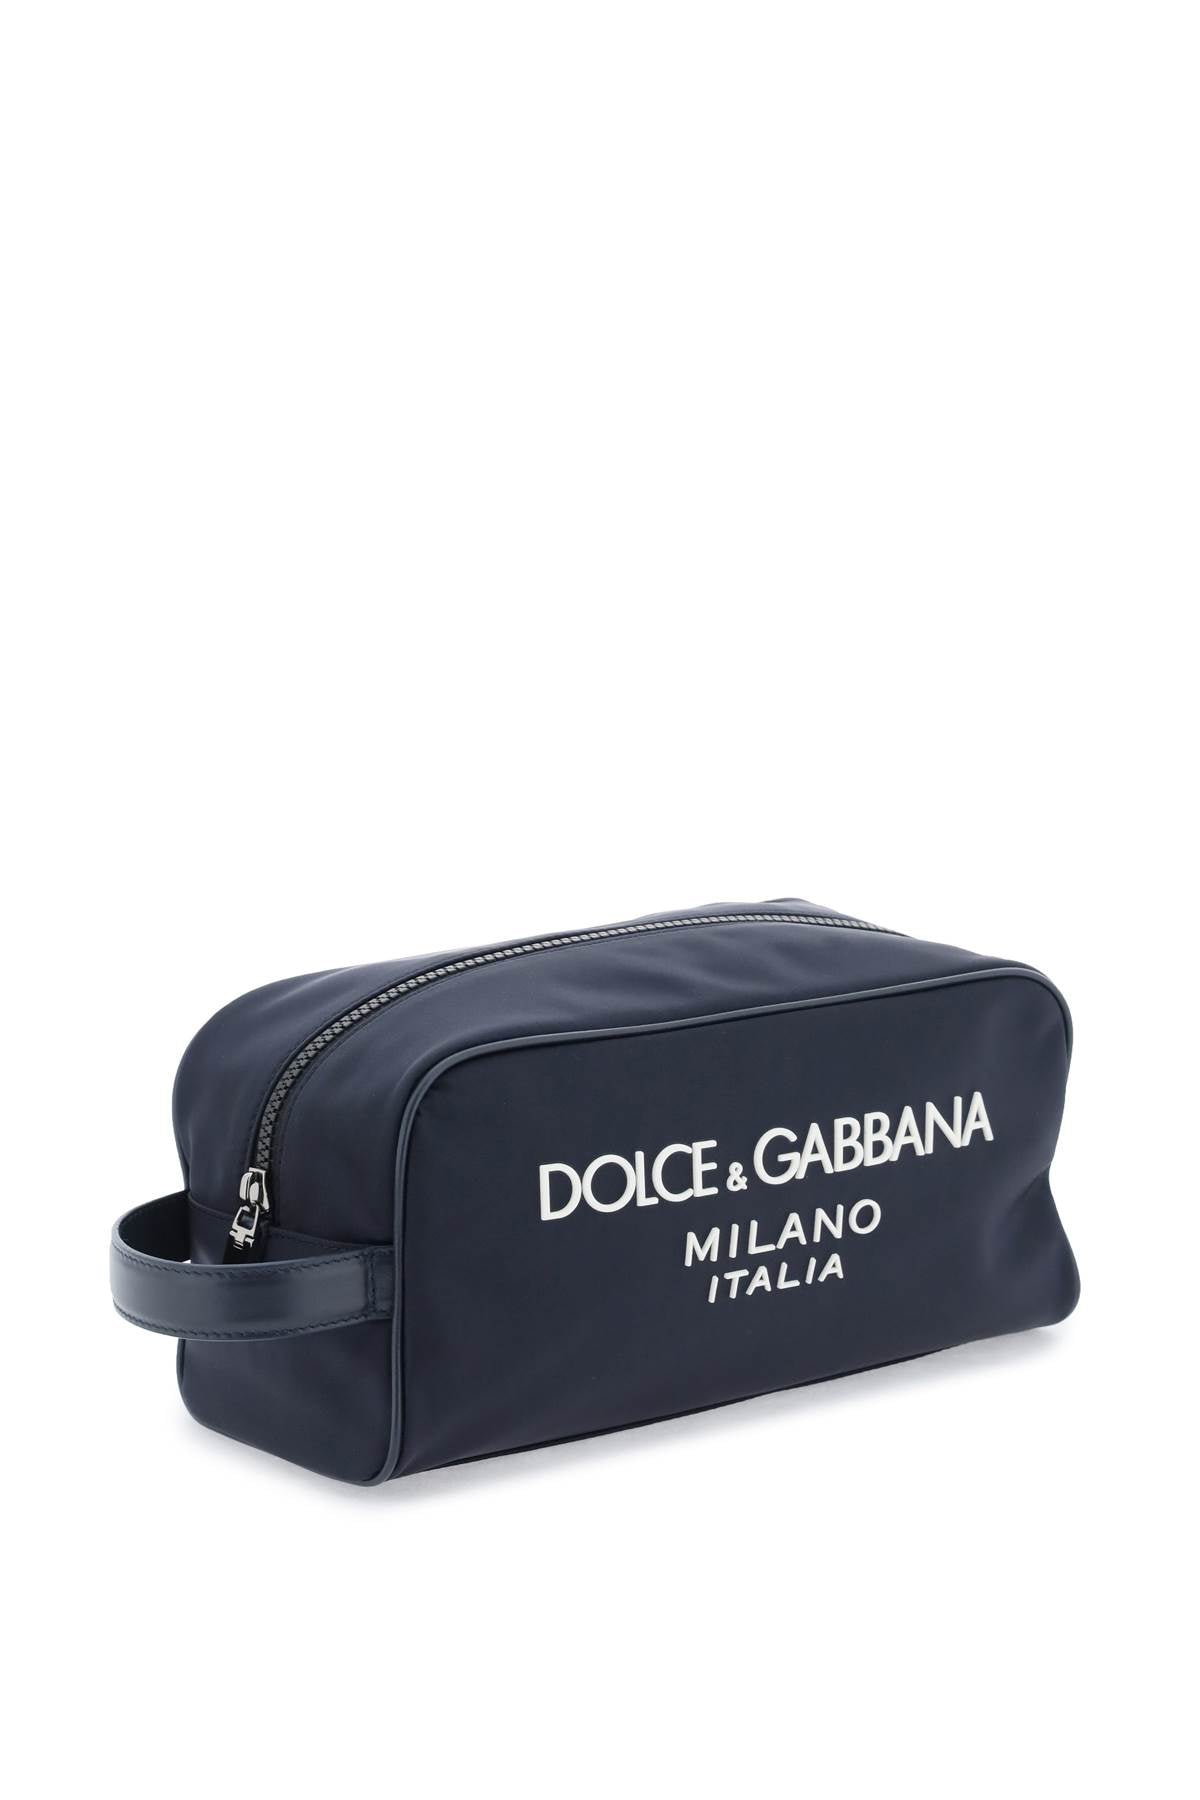 Dolce & Gabbana Dolce & gabbana rubberized logo beauty case